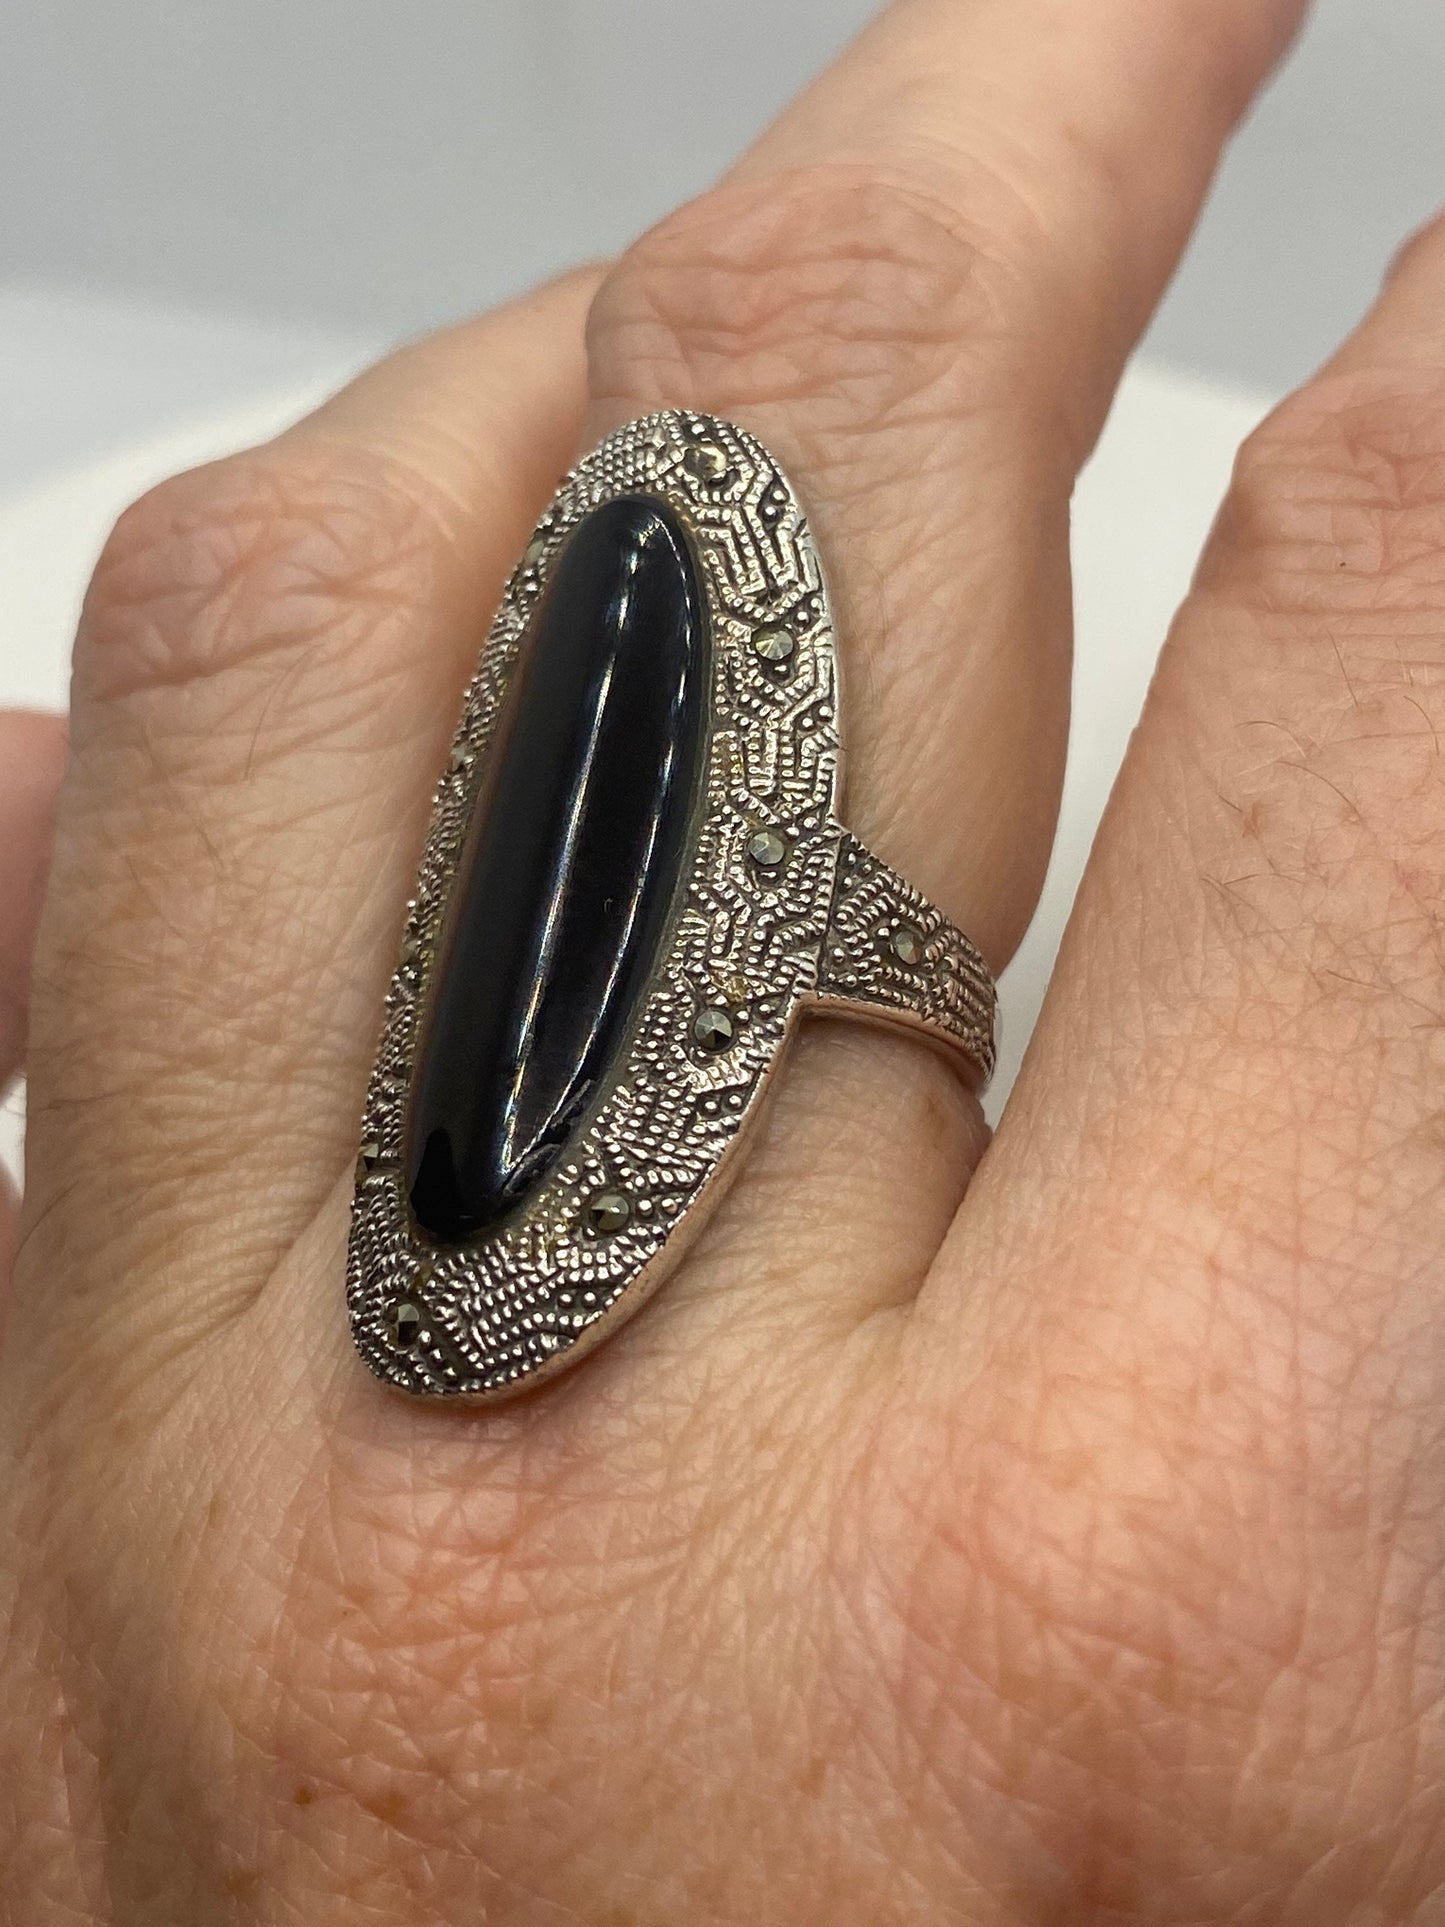 Vintage Marcasite Black Onyx 925 Sterling Silver Cocktail Ring